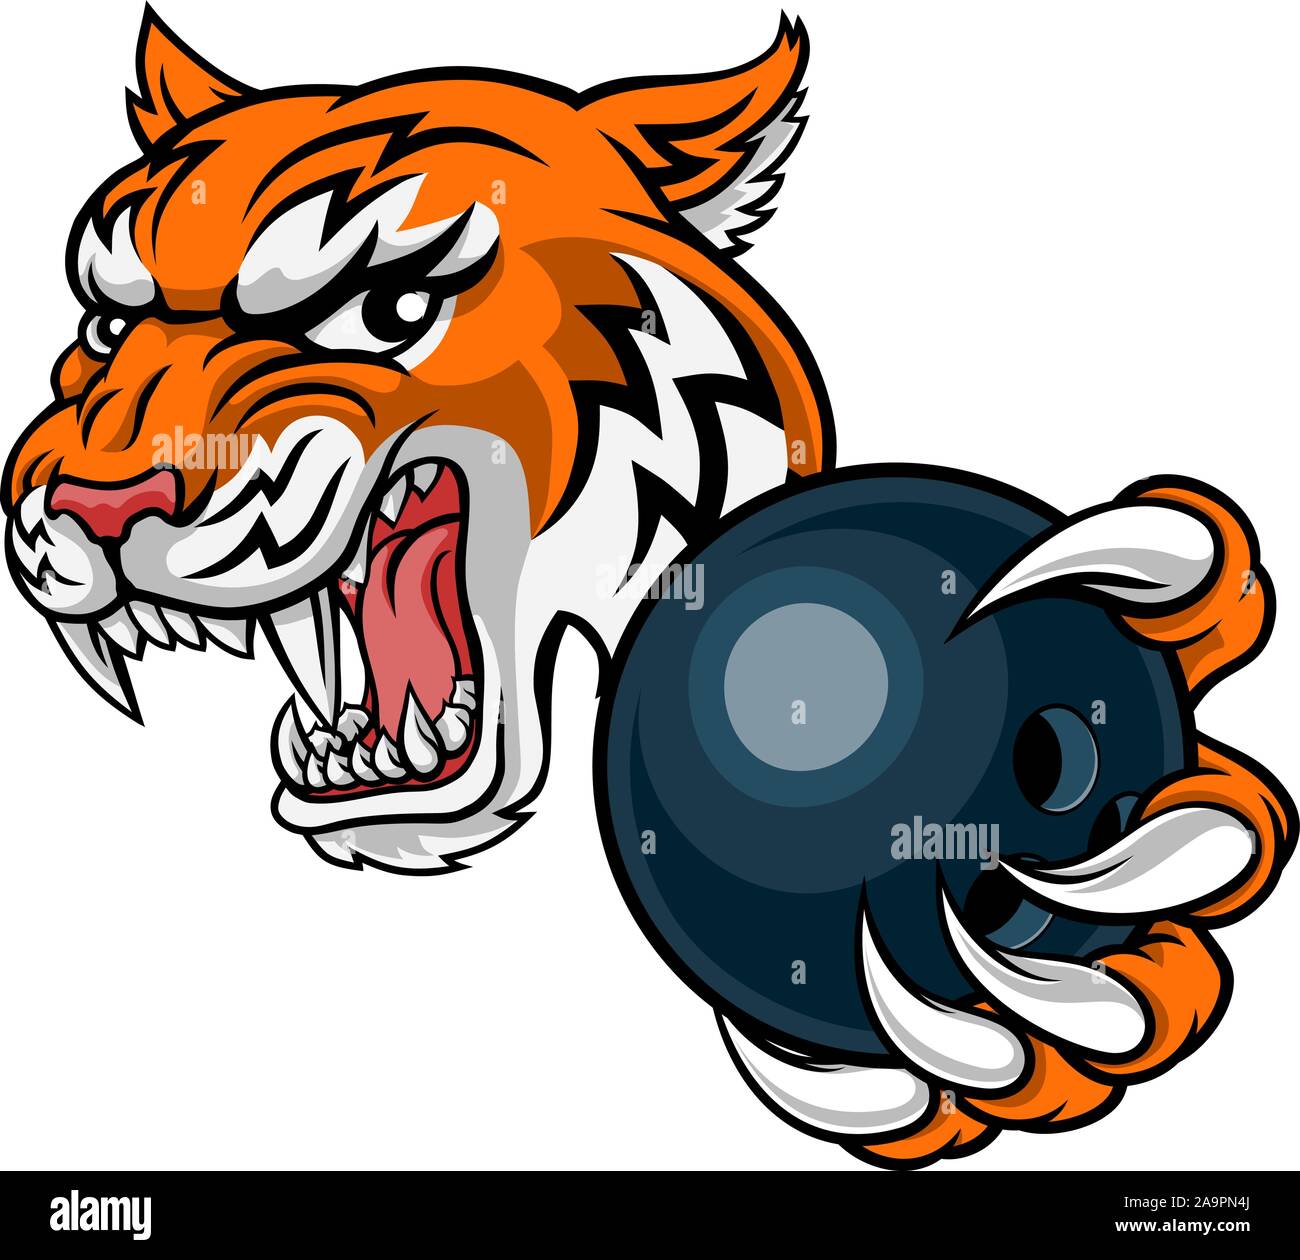 Tiger Bowling Player Animal Sports Mascot Stock Vector